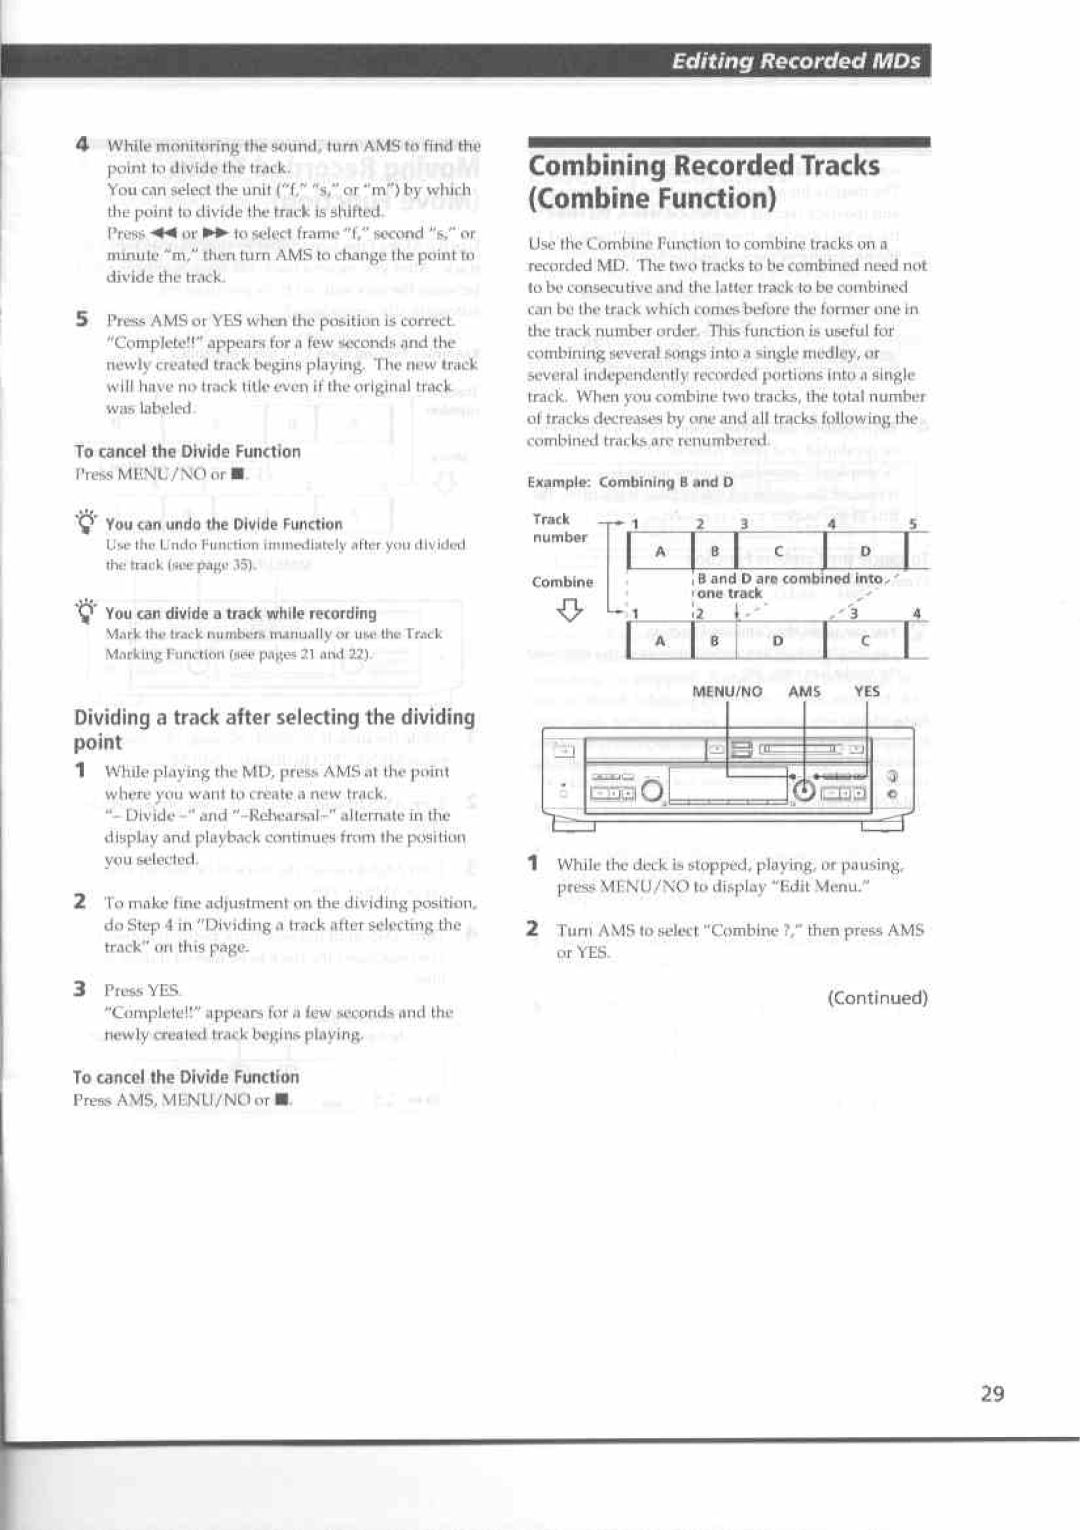 Sony MXD-D3 manual 